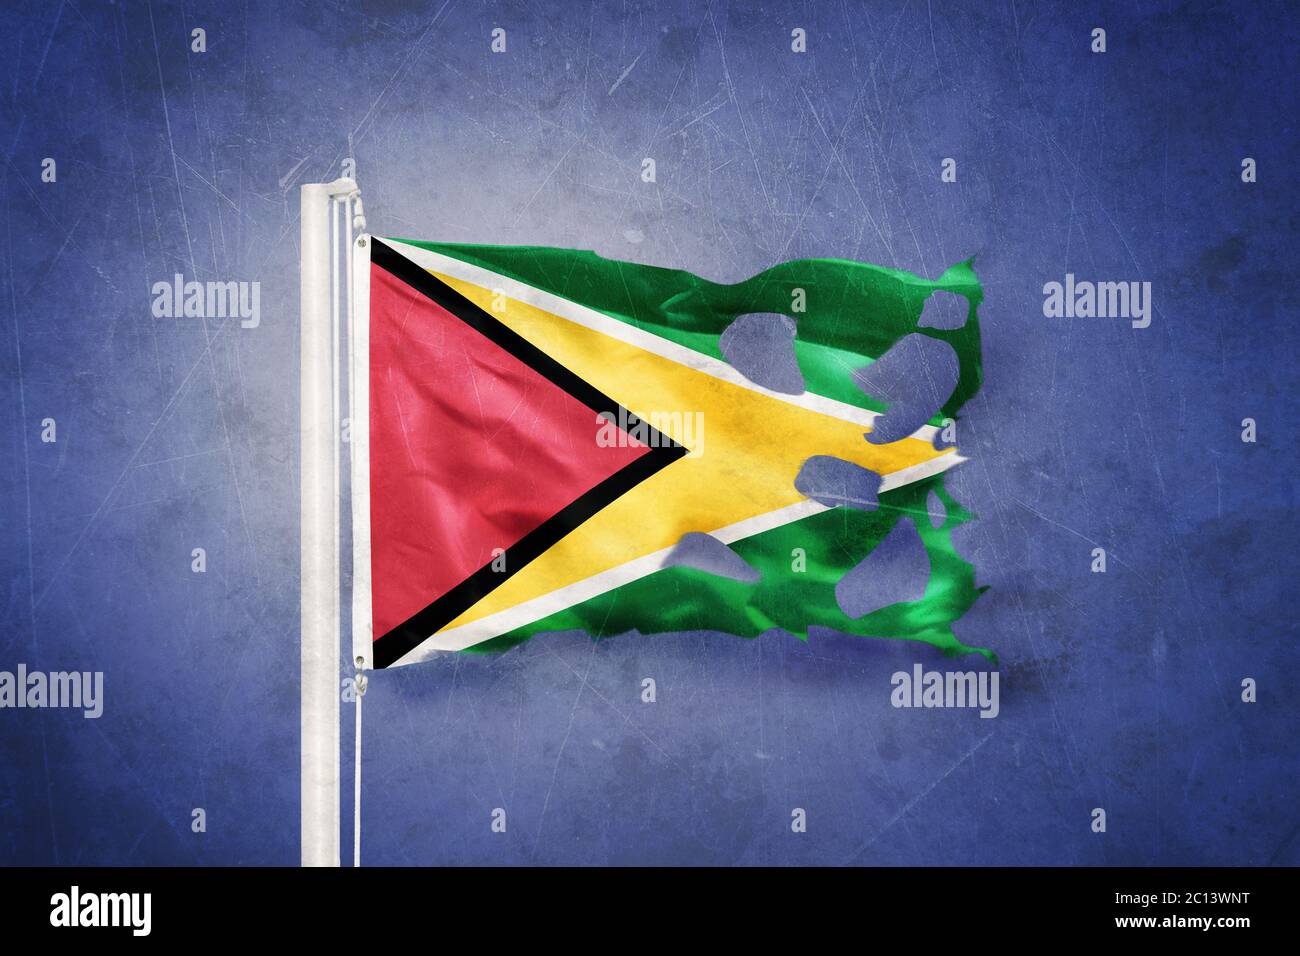 Torn flag of Guyana flying against grunge background Stock Photo